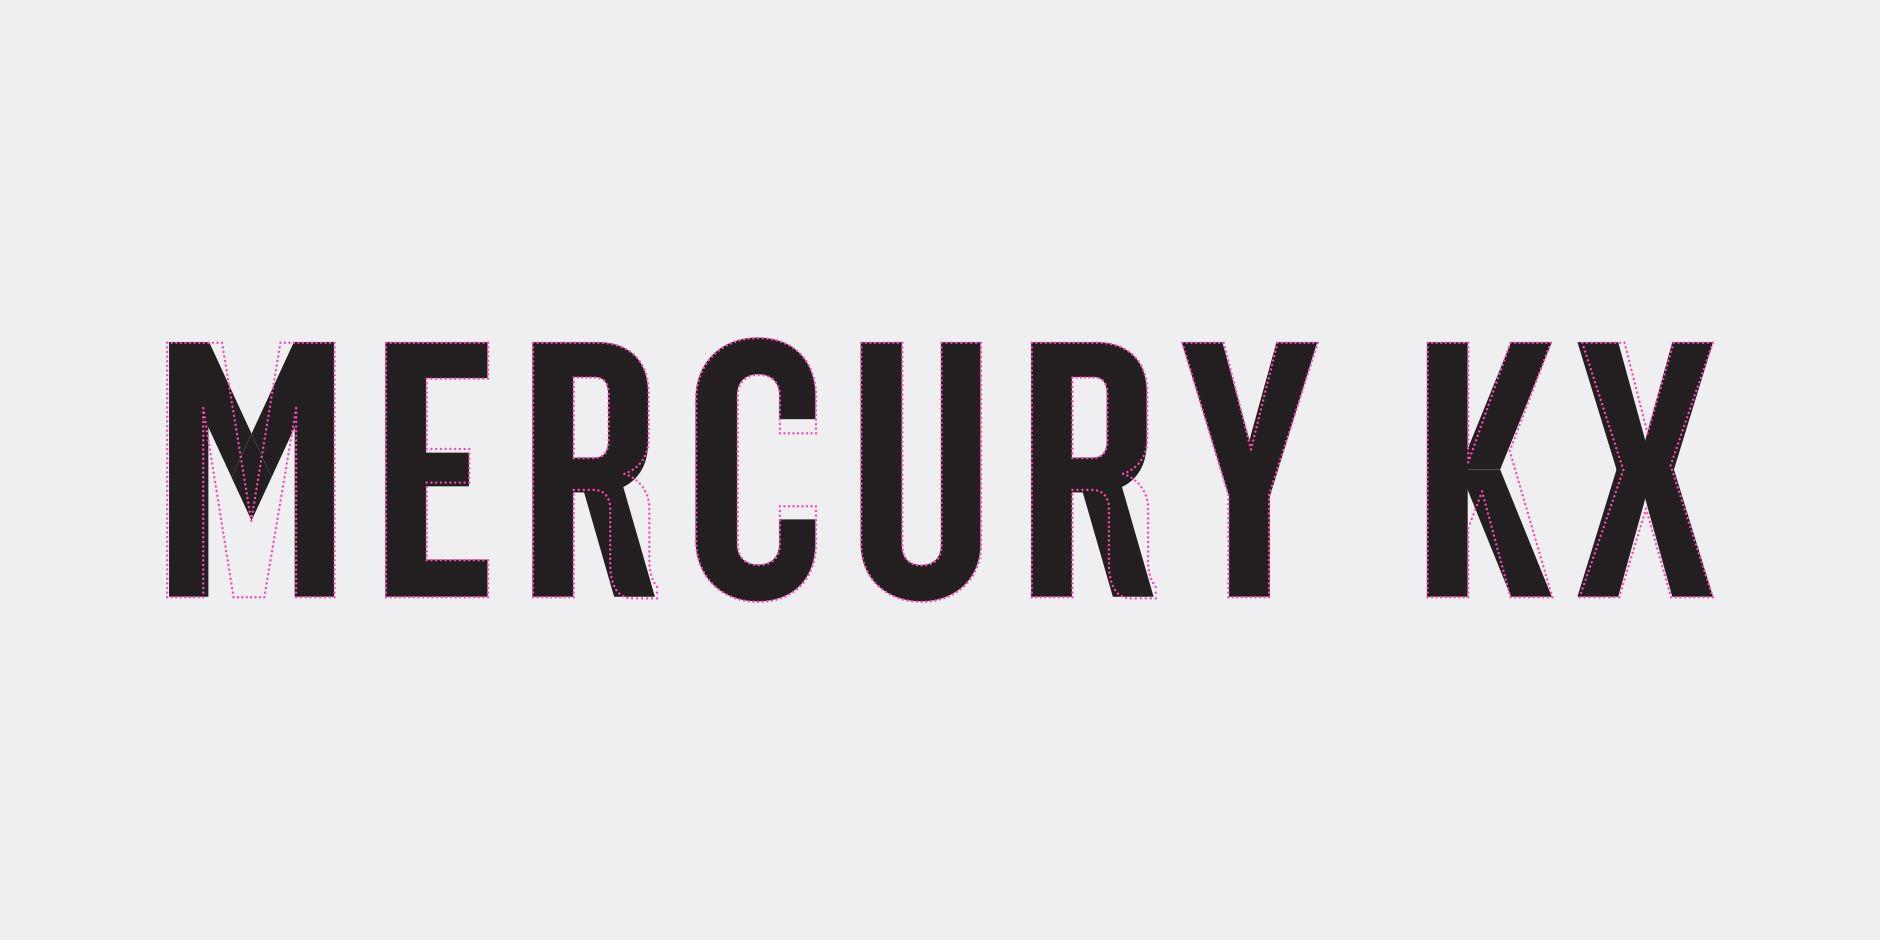 KX Logo - Limited Edition Design. Mercury KX logo